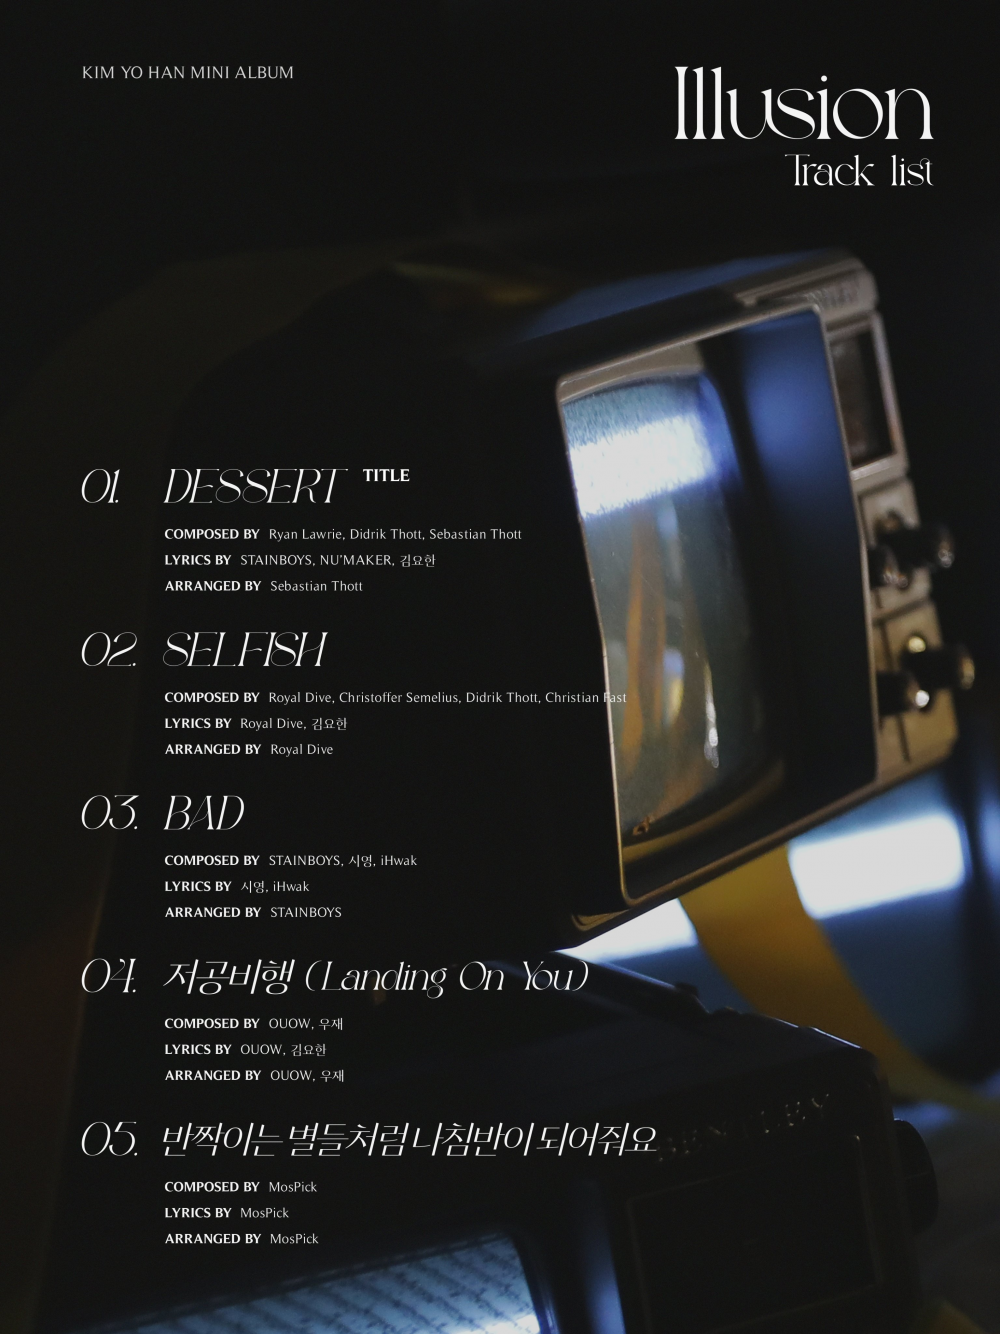 [Камбэк] Ким Ёхан из WEi мини-альбом «Illusion»: лирик-тизер и попурри треков